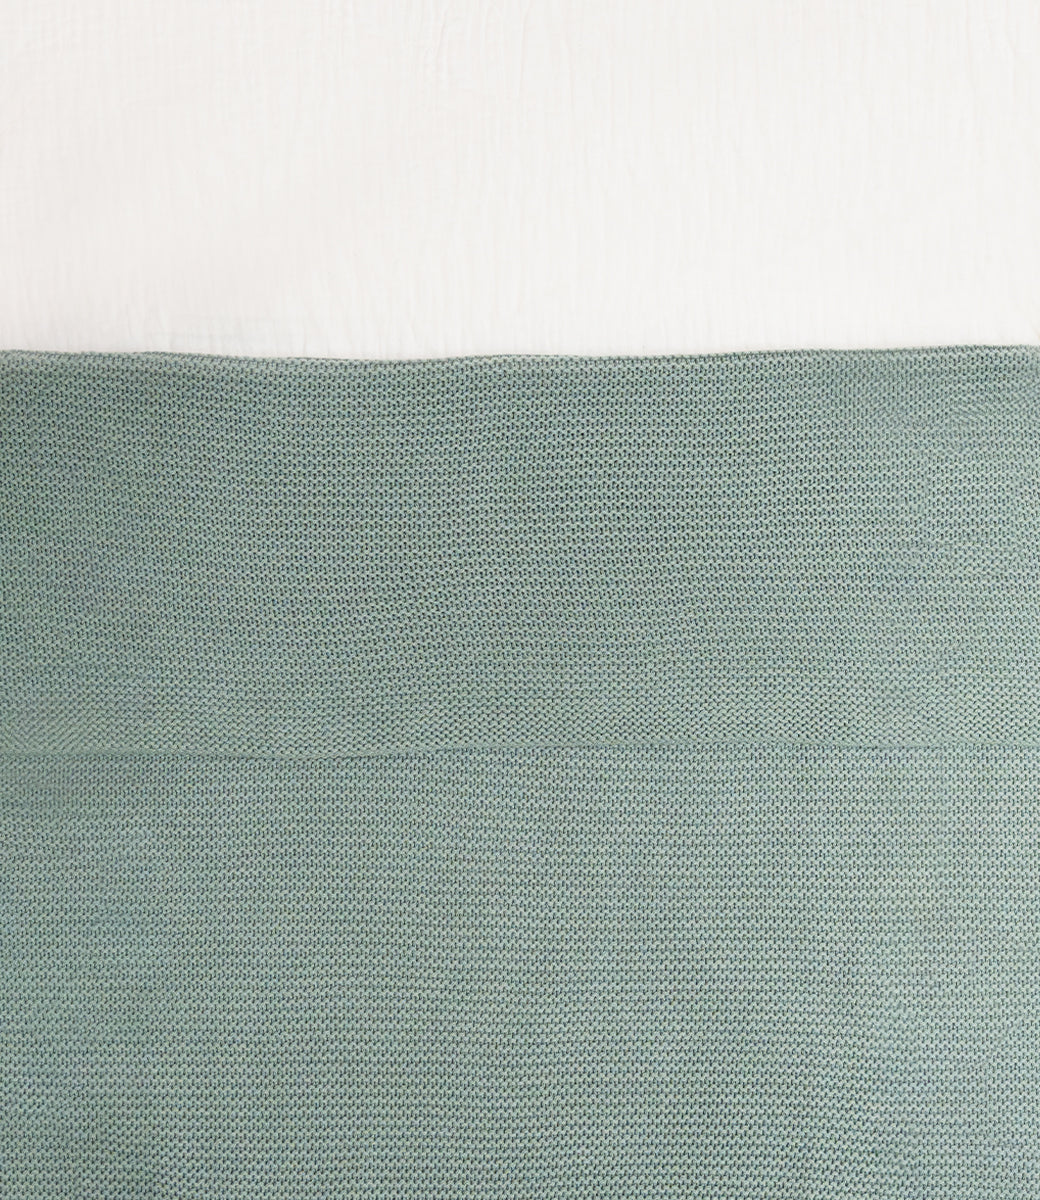 Blanket // Basic knit - Forest green